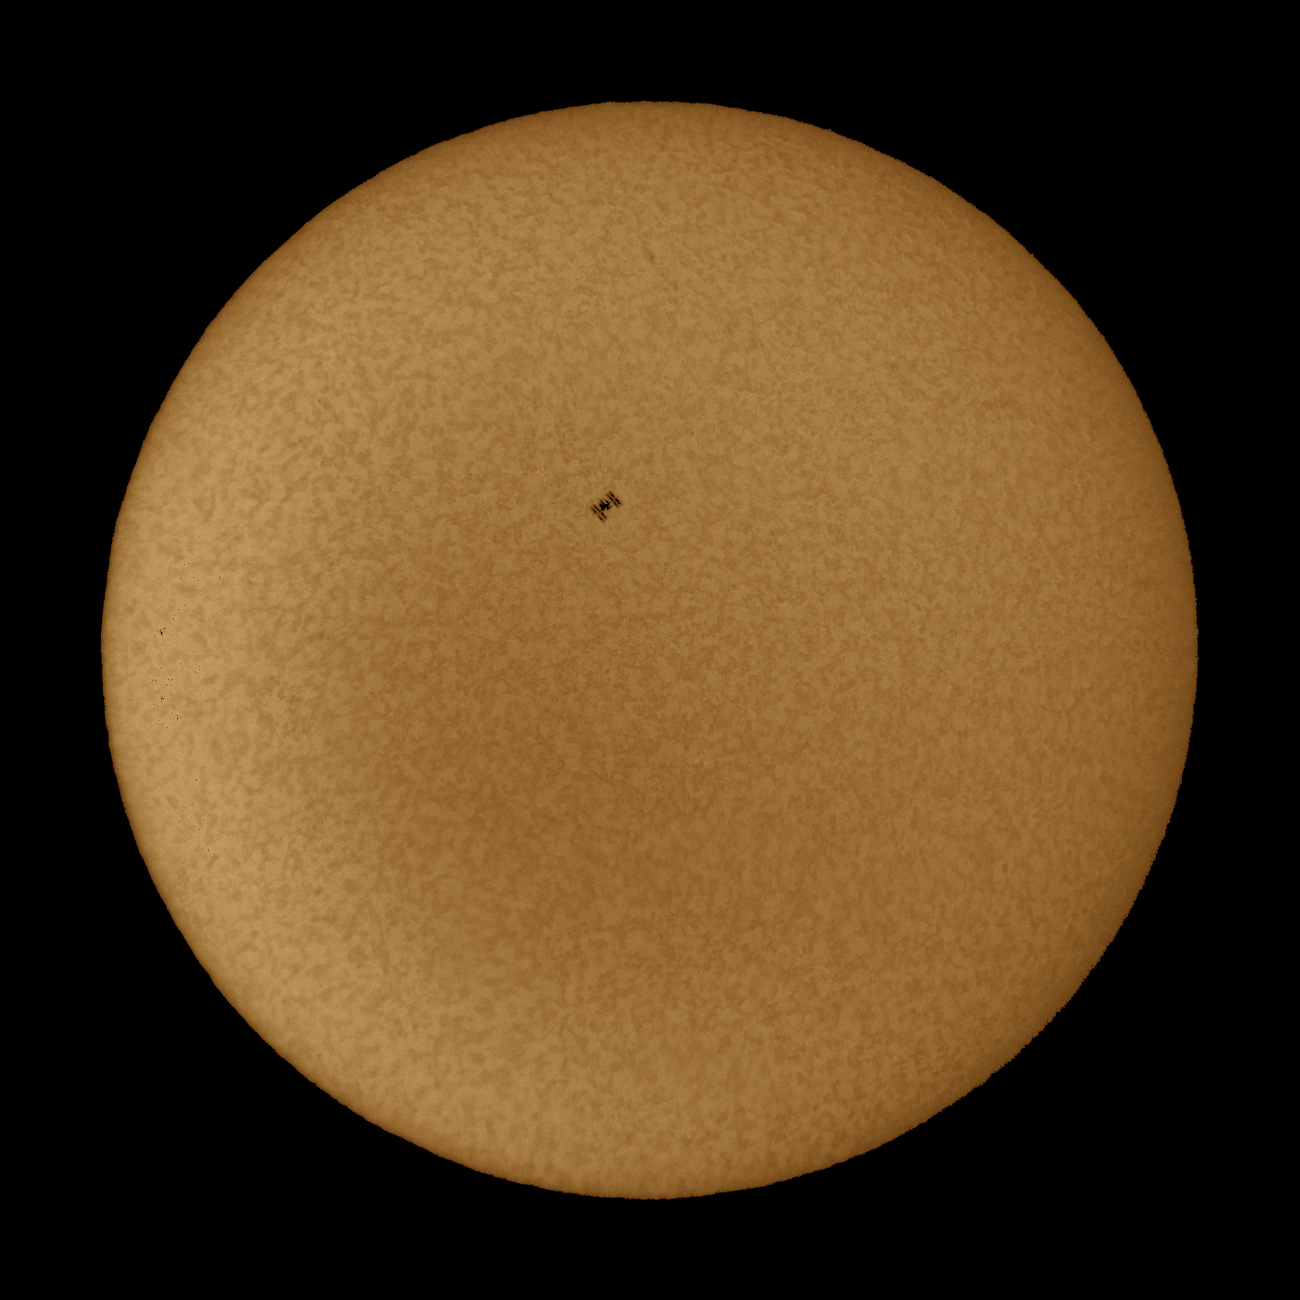 ISS-solar transit on 8/28/19